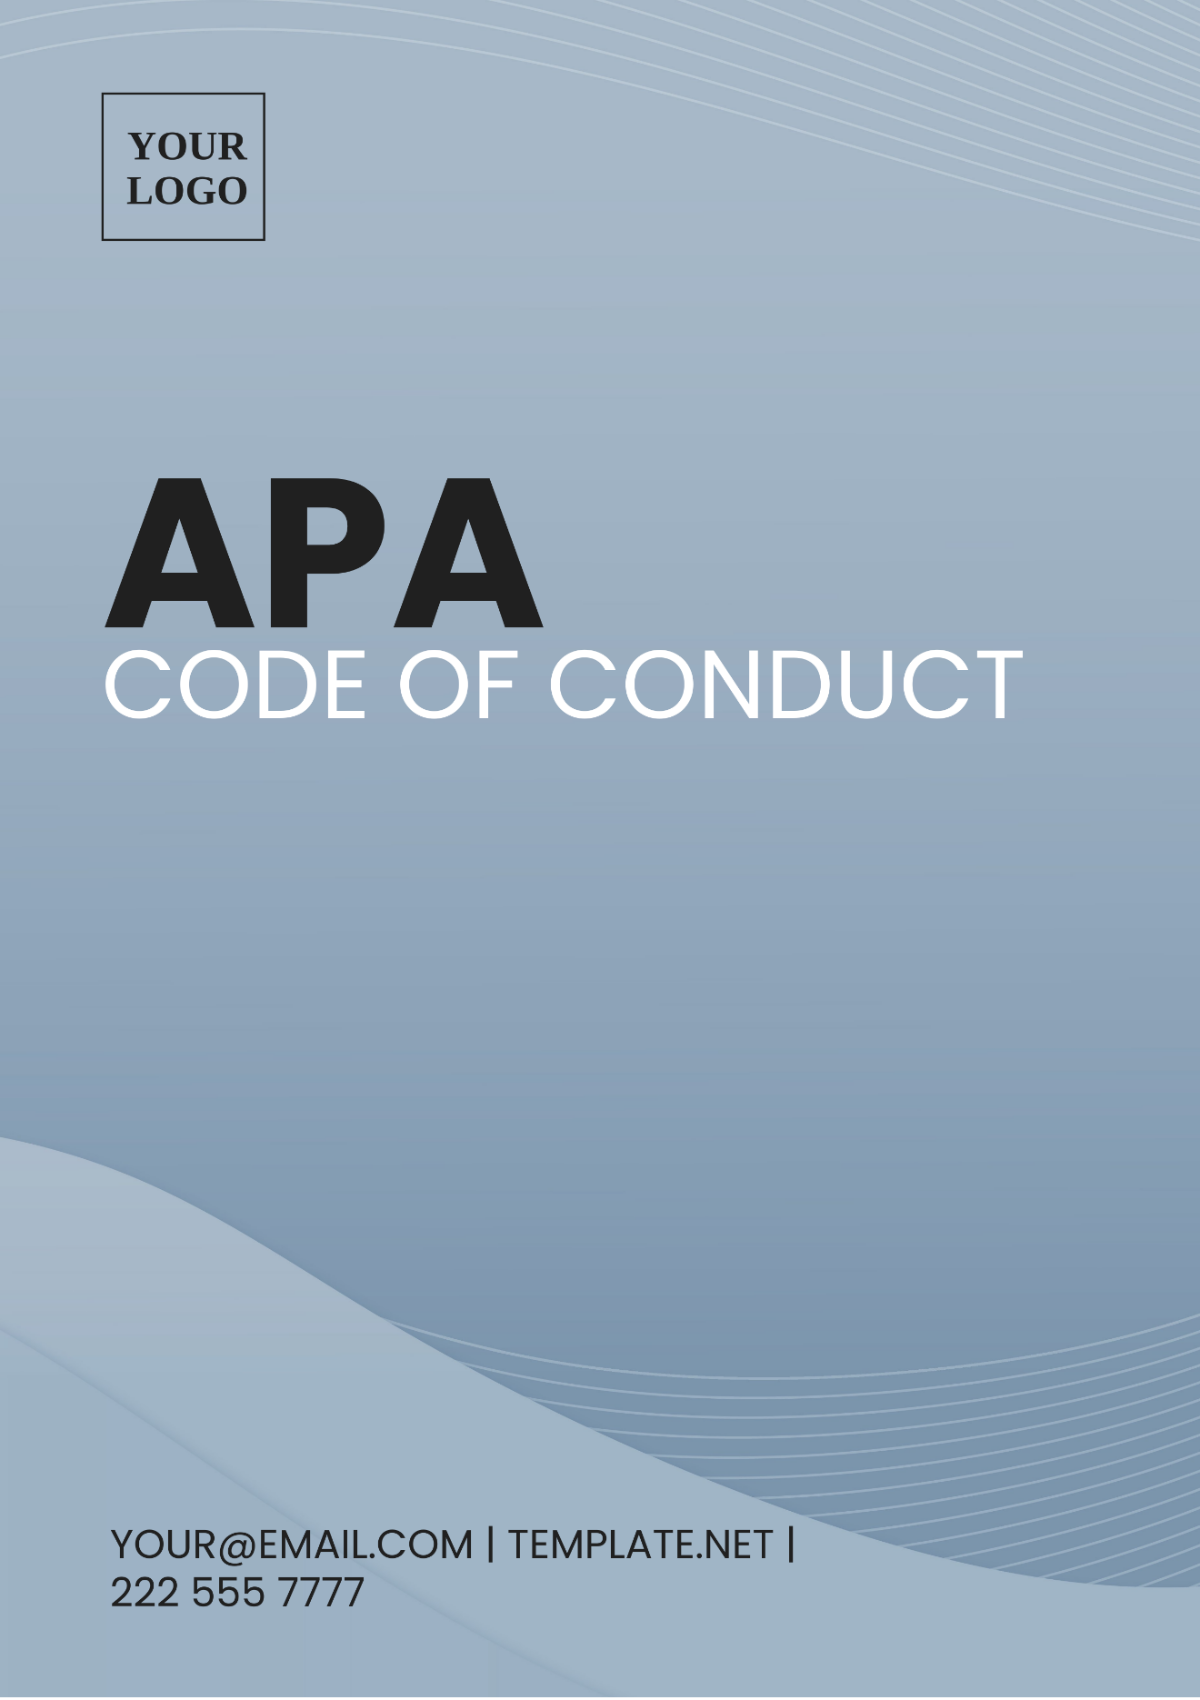 APA Code of Conduct Template